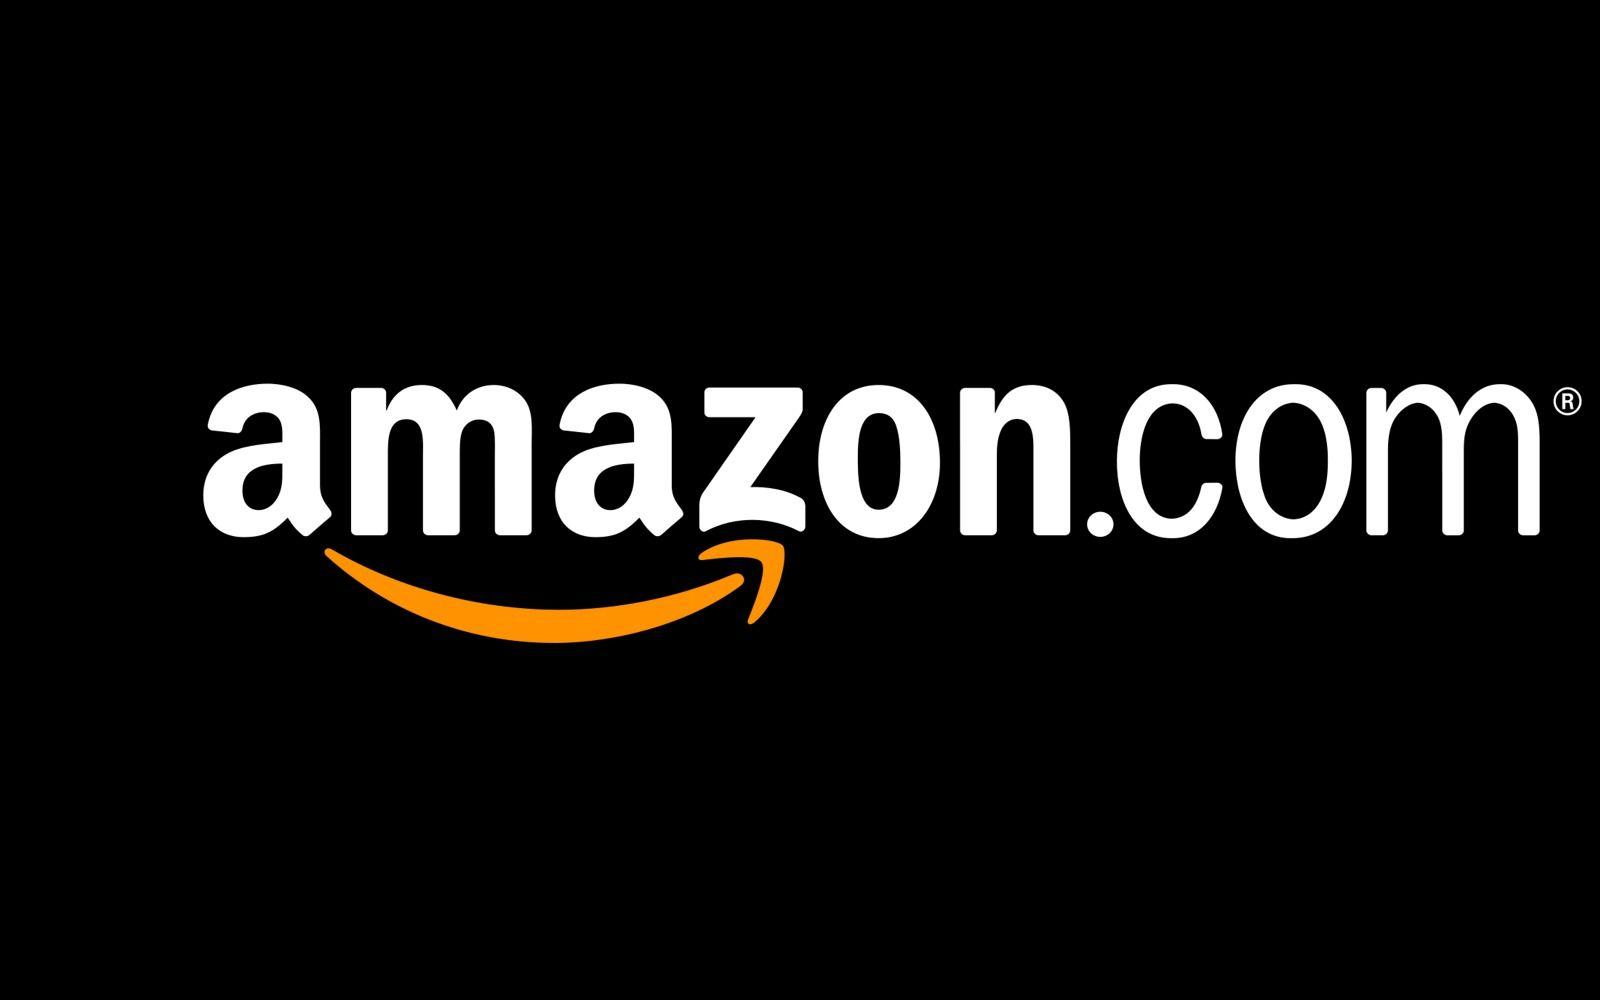 Amazon.com Logo - Amazon com Logos